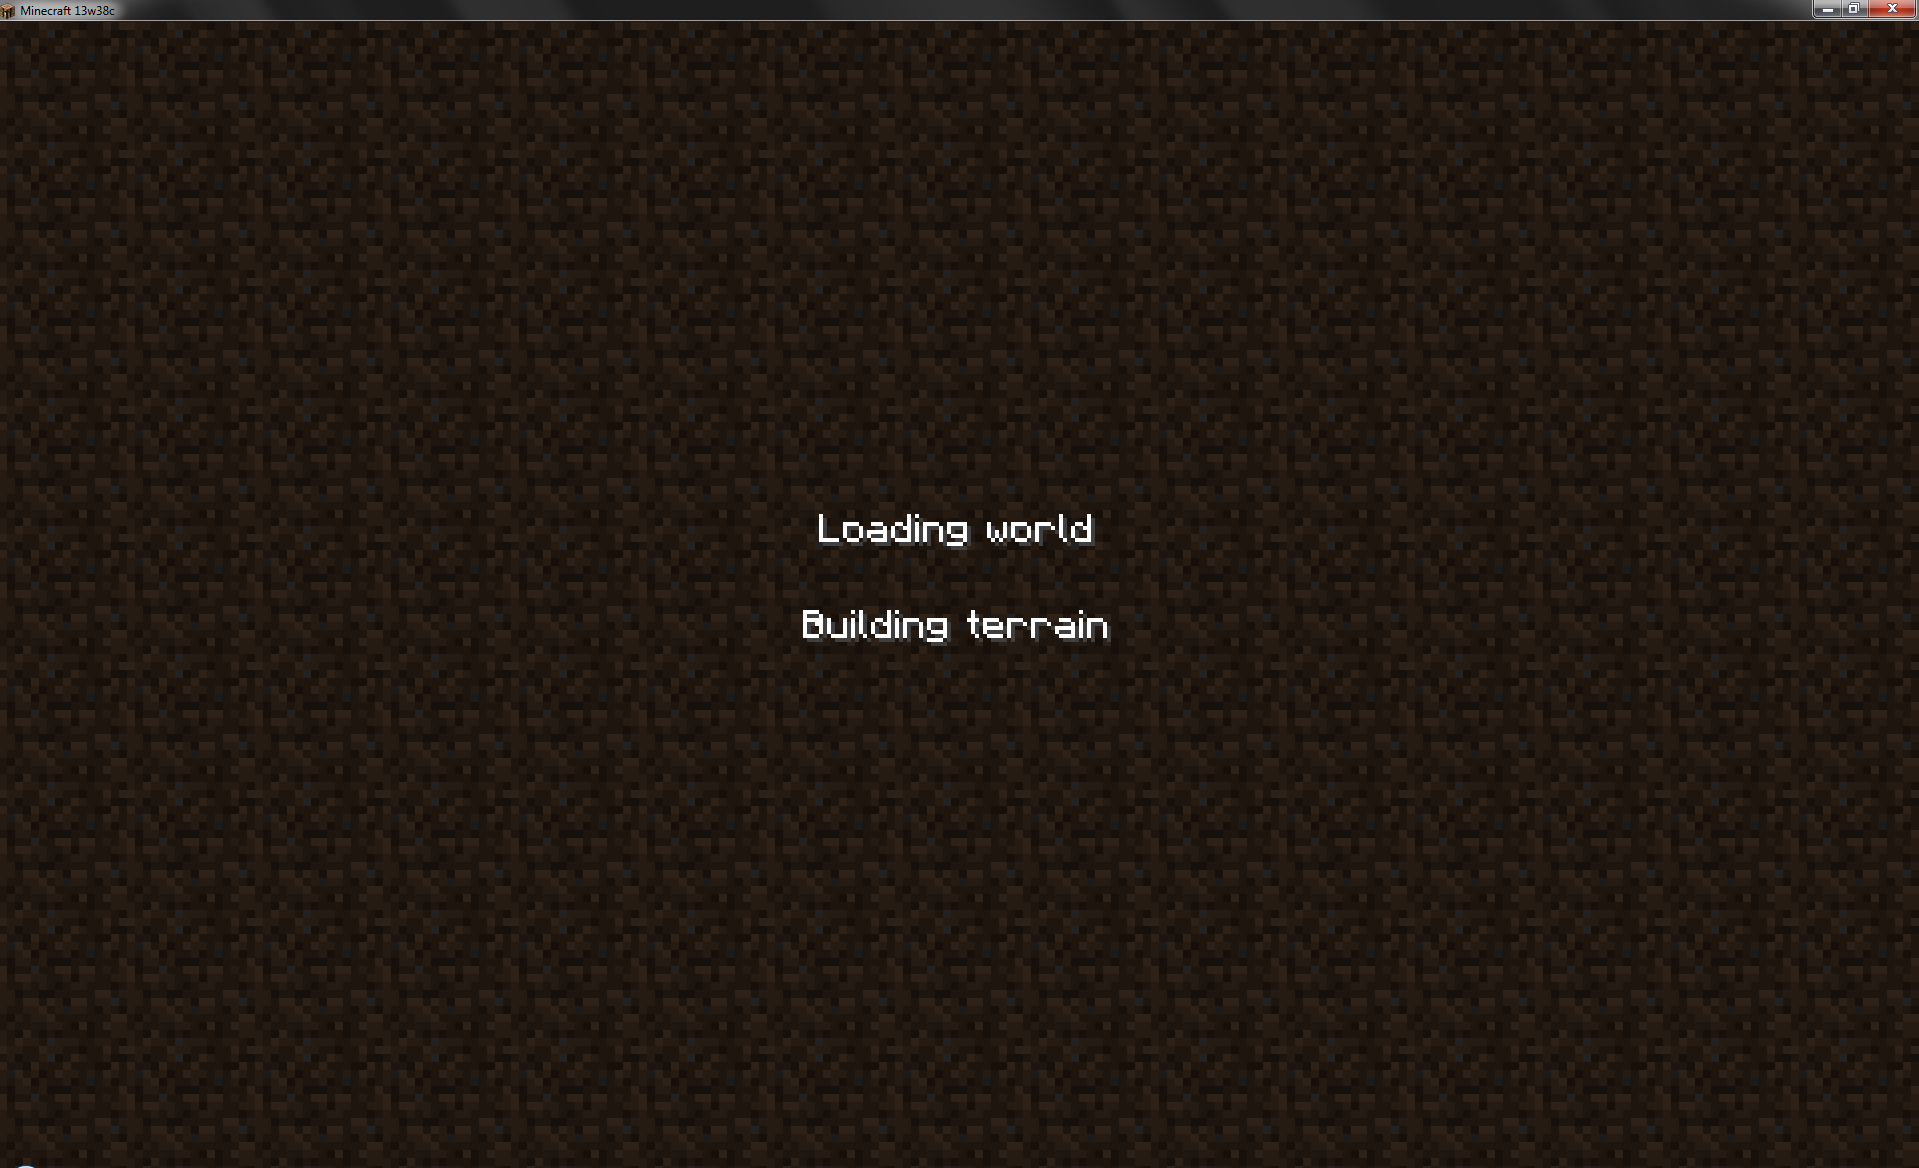 Load world. Minecraft загрузка. Загрузочный экран МАЙНКРАФТА. Minecraft экран загрузки.